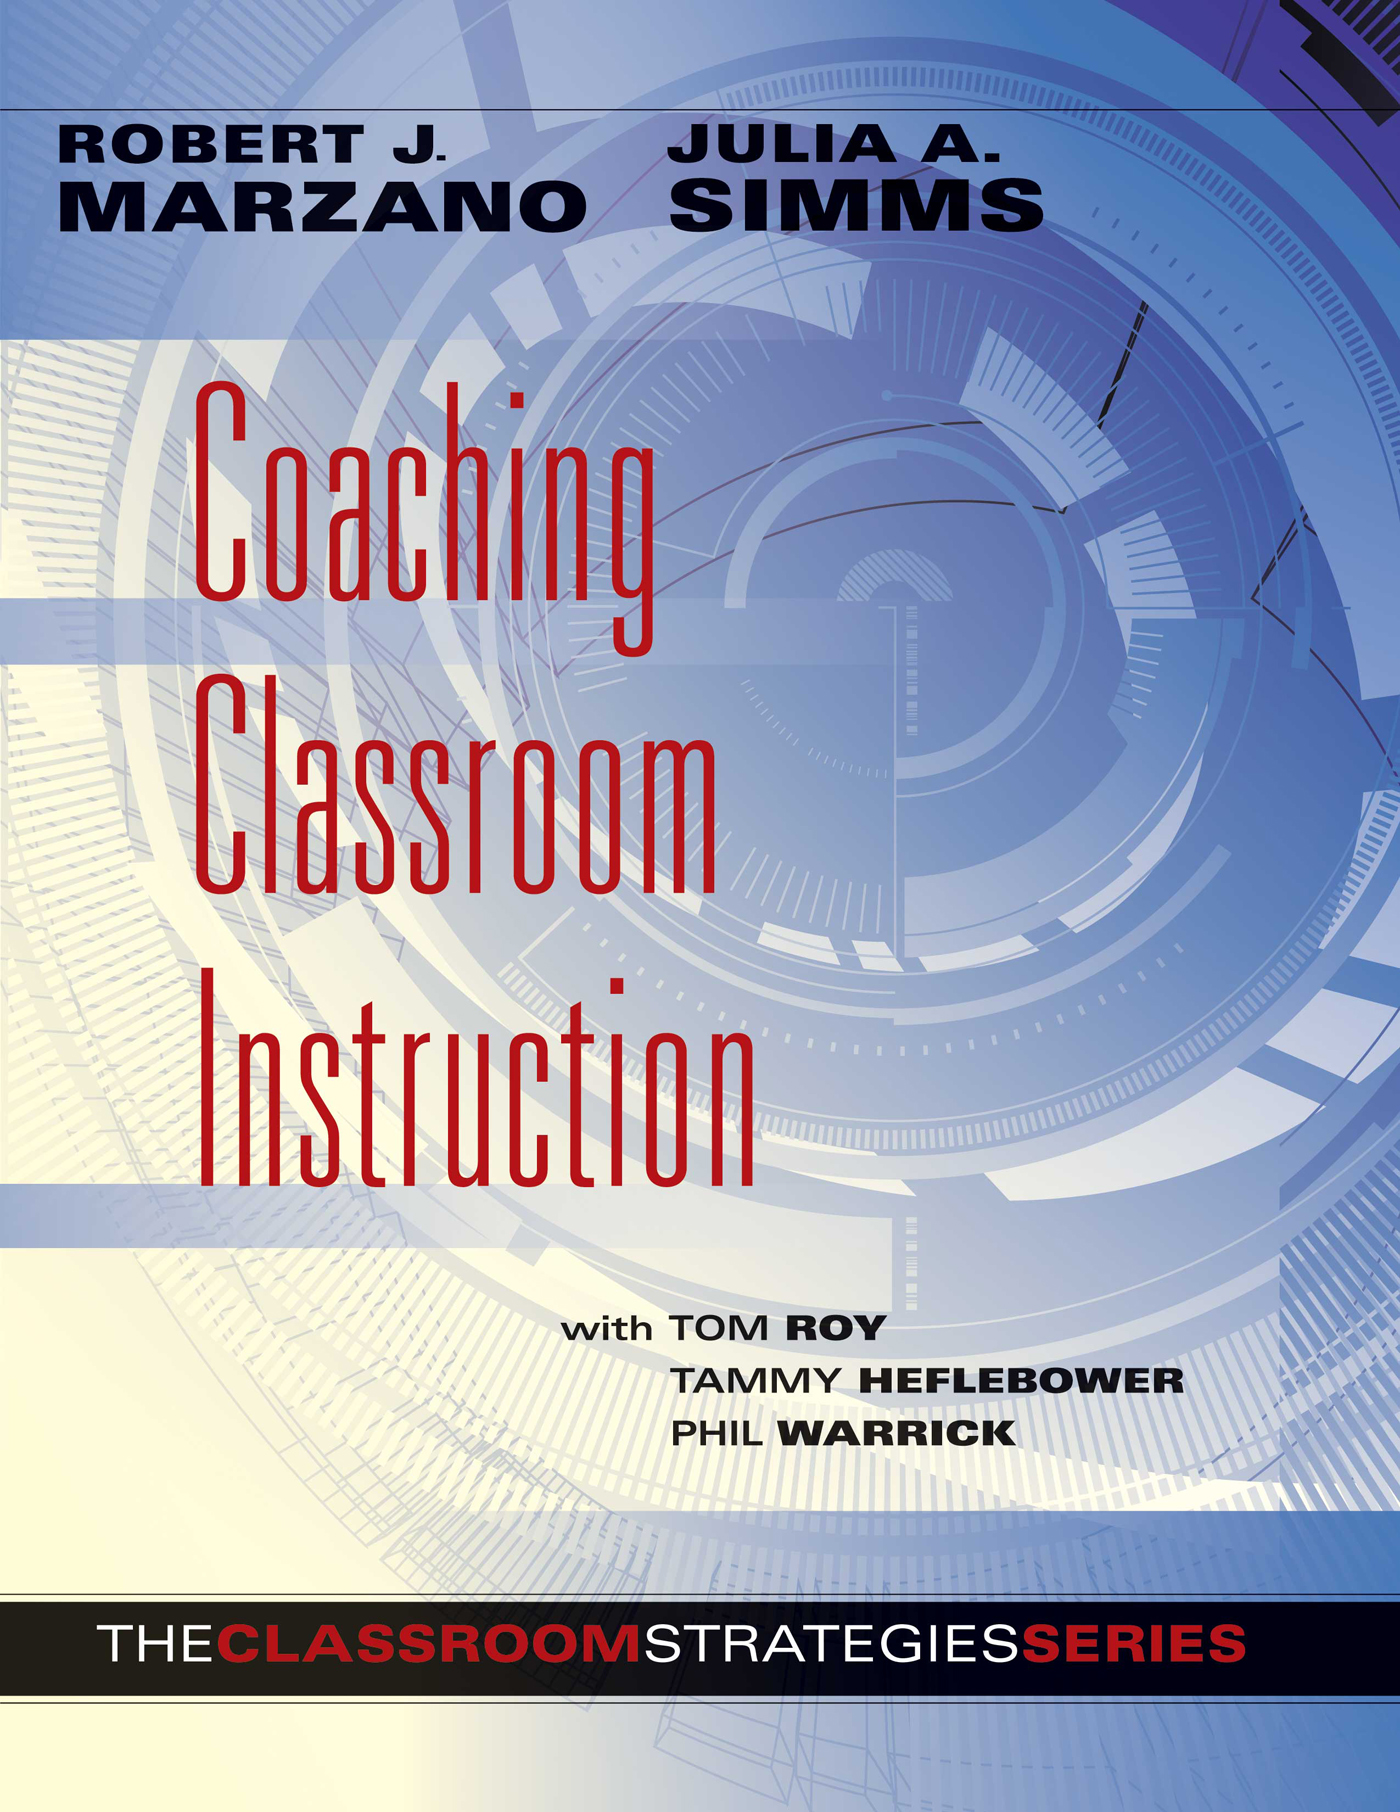 ROBERT J MARZANO JULIA A SIMMS Coaching Classroom Instruction with TOM - photo 1